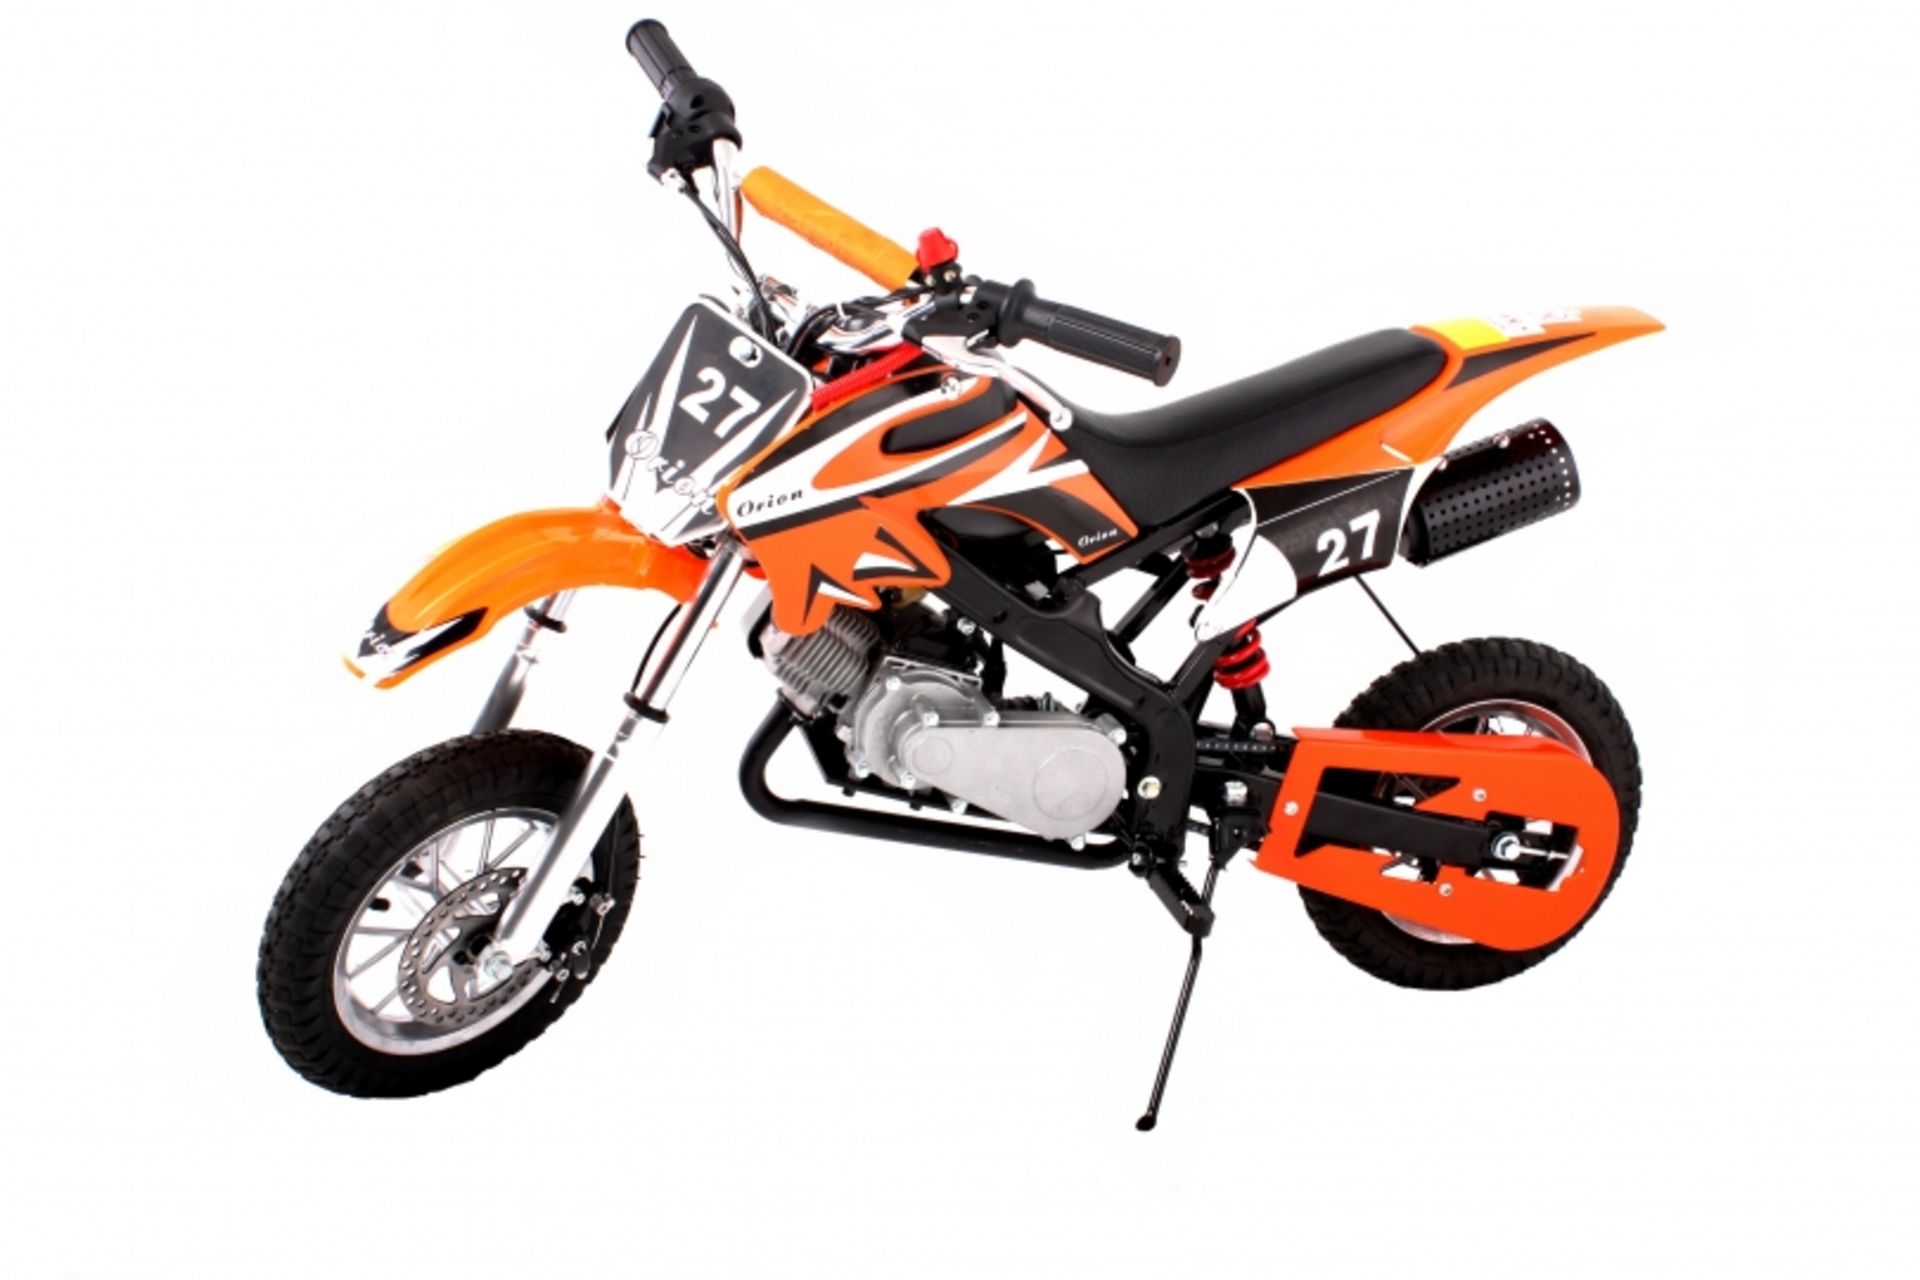 1 x Pocket Rocket Scrambler 49cc Mini Dirt Devil Motor Bike (Orange). Brand new and Boxed! Very high